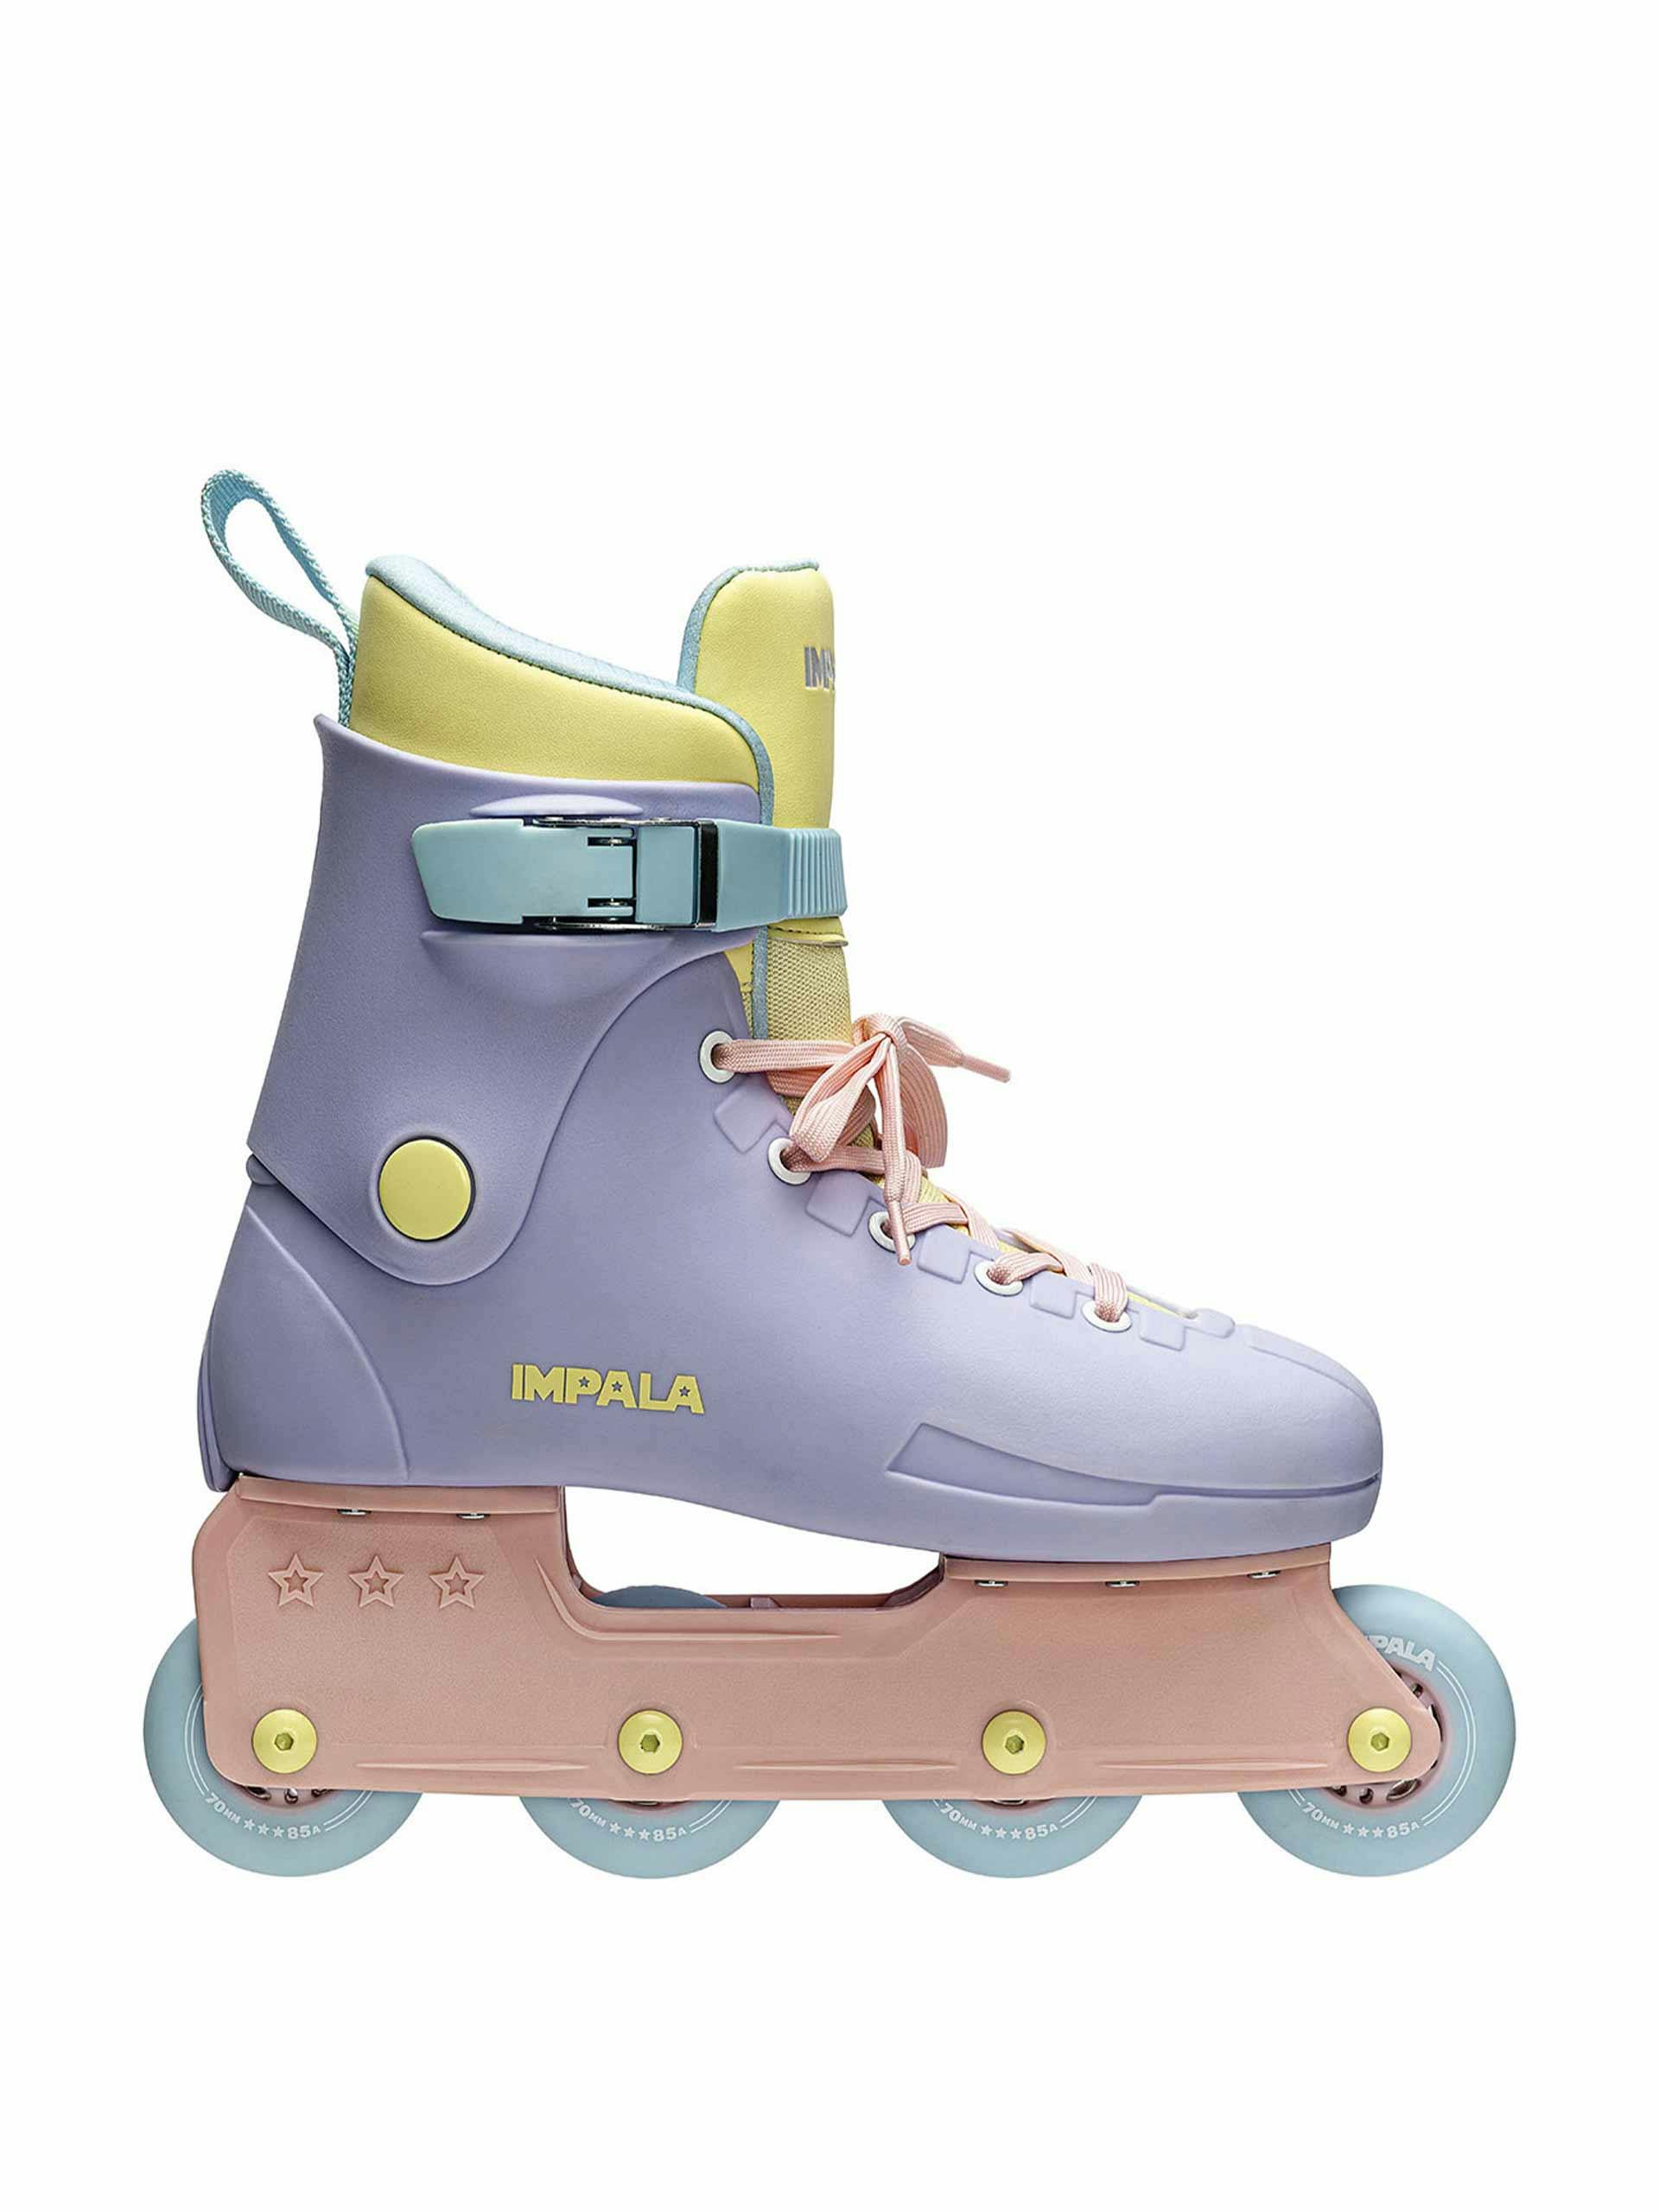 Pastel coloured roller skates